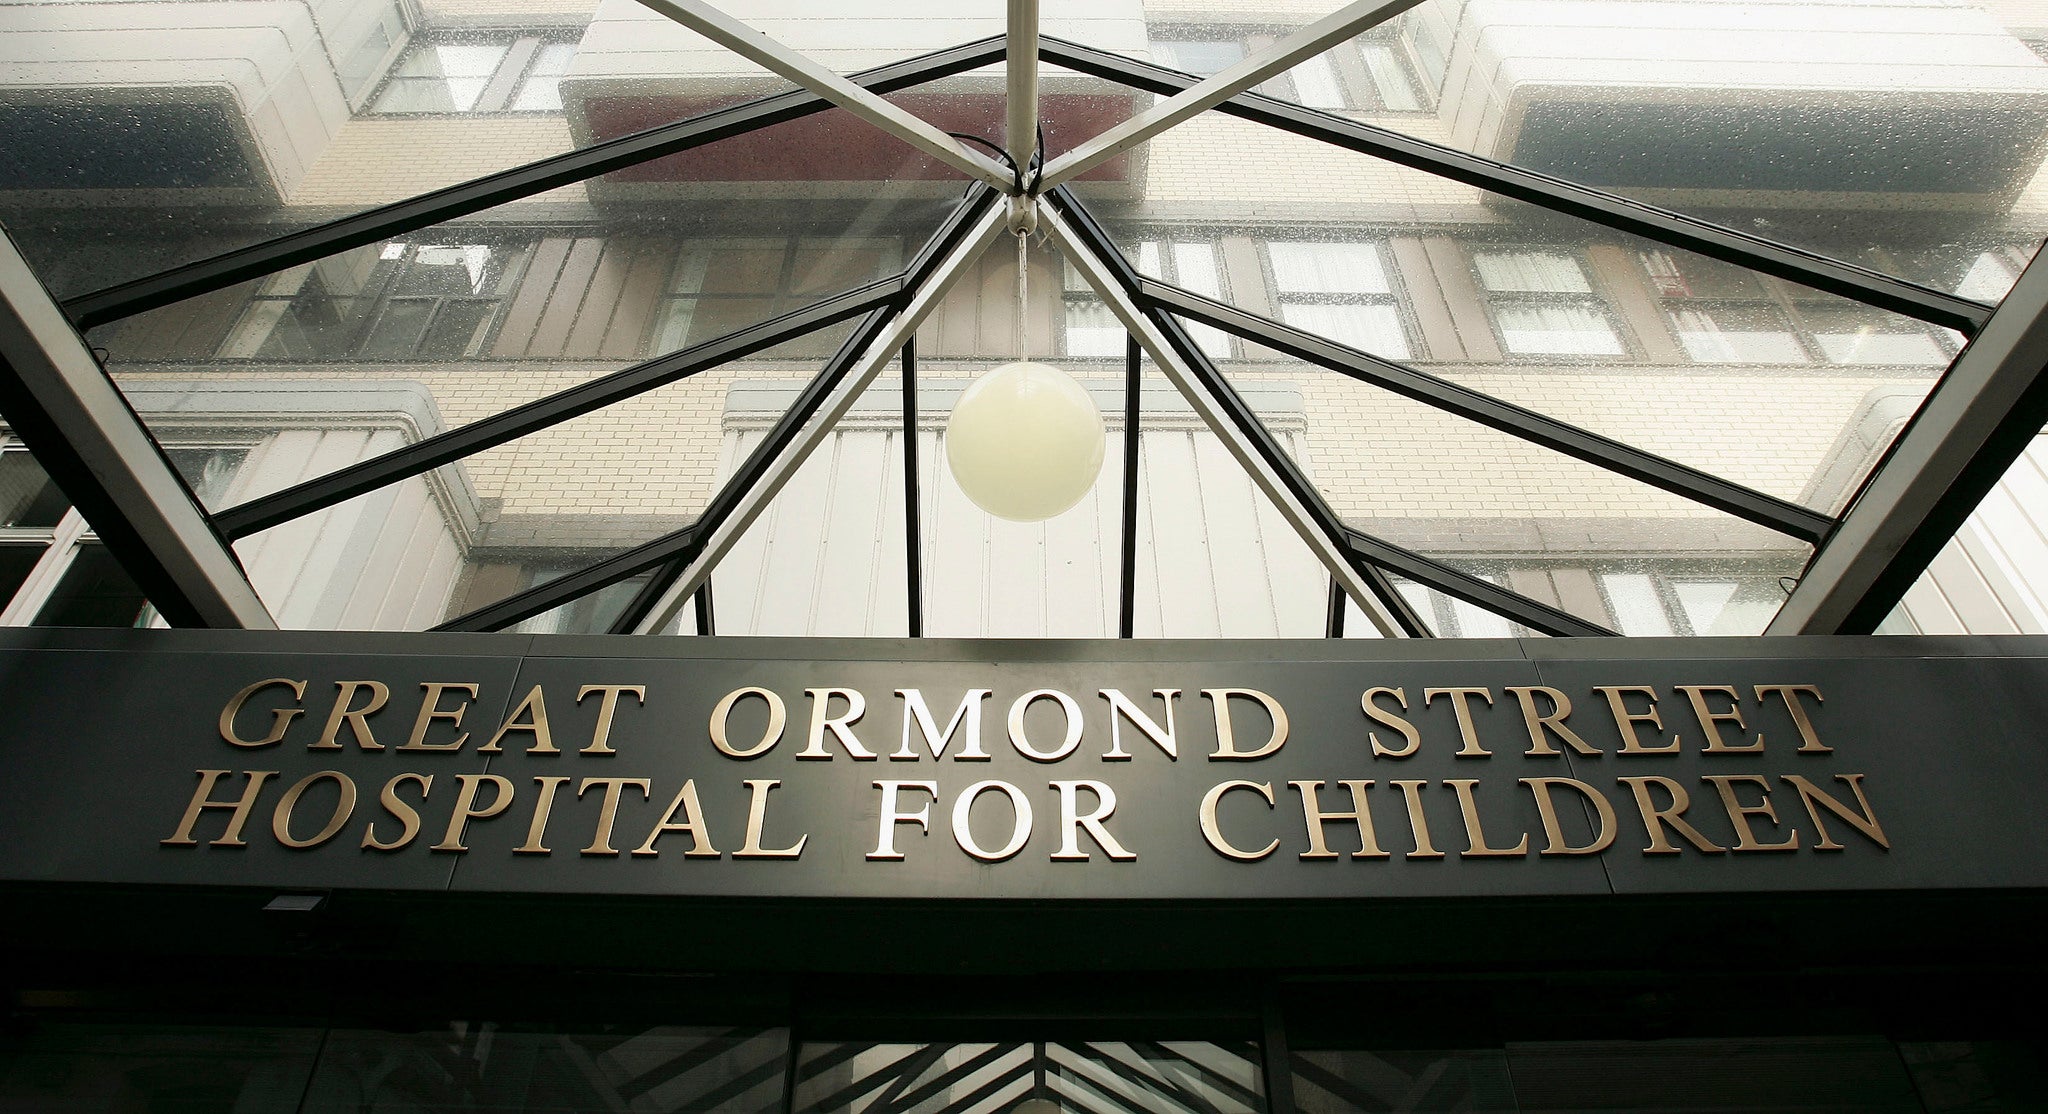 Her Highness Sheikha Fatima bint Mubarak has given £60million to Great Ormond Street Hospital